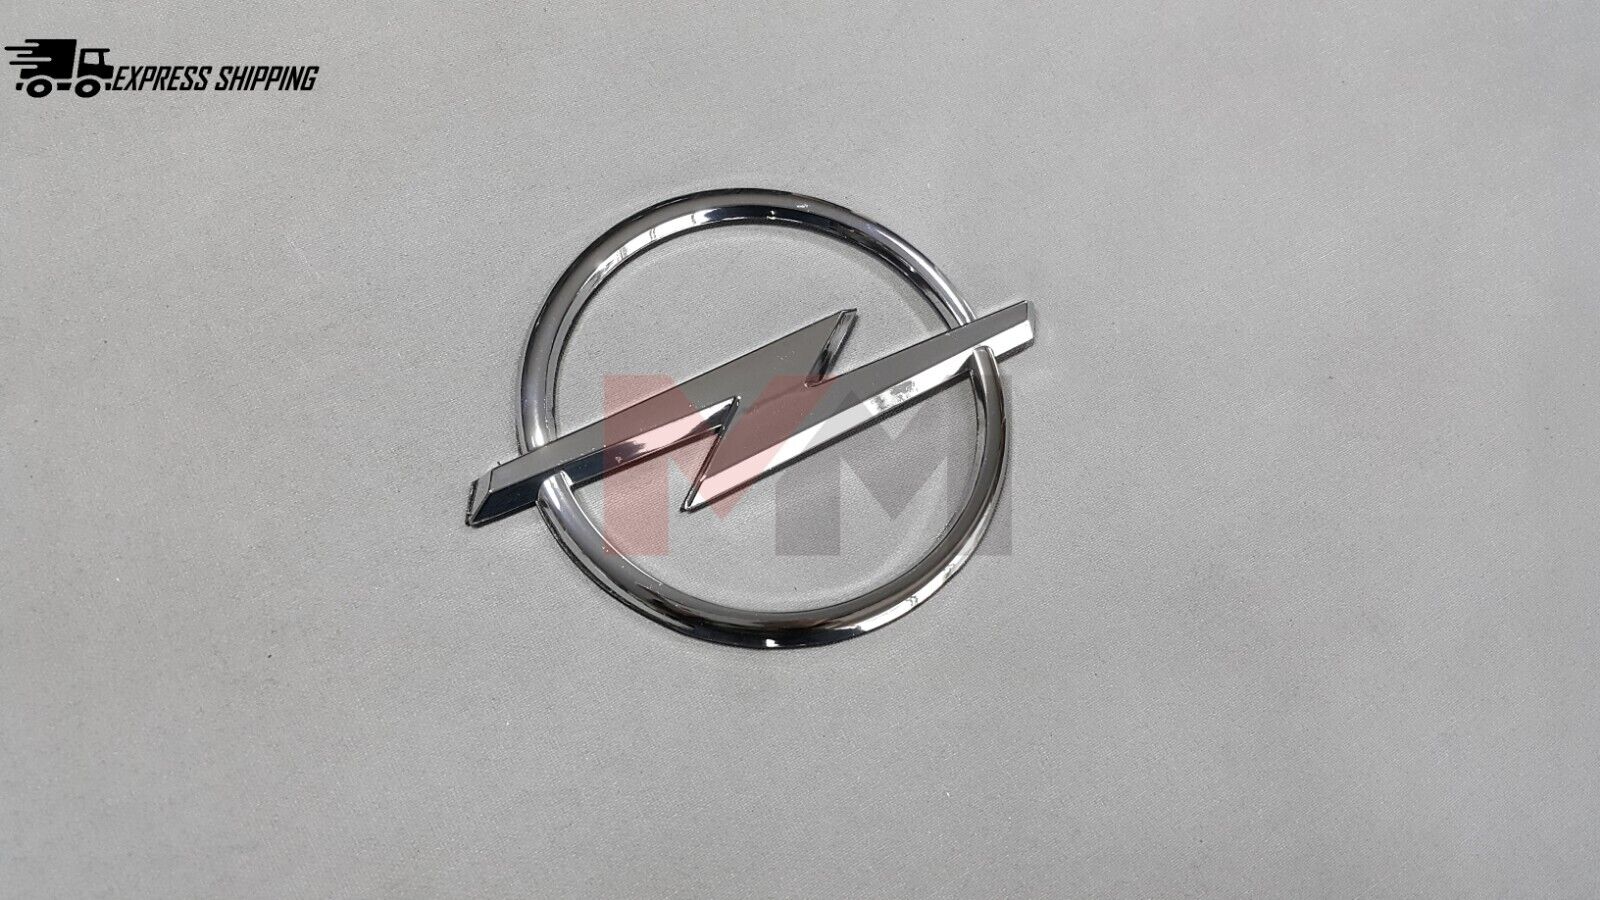 OPEL Astra H 2004-2014 Front Grille Emblem Chrome 1324033 11.4CM (Ring Diameter)